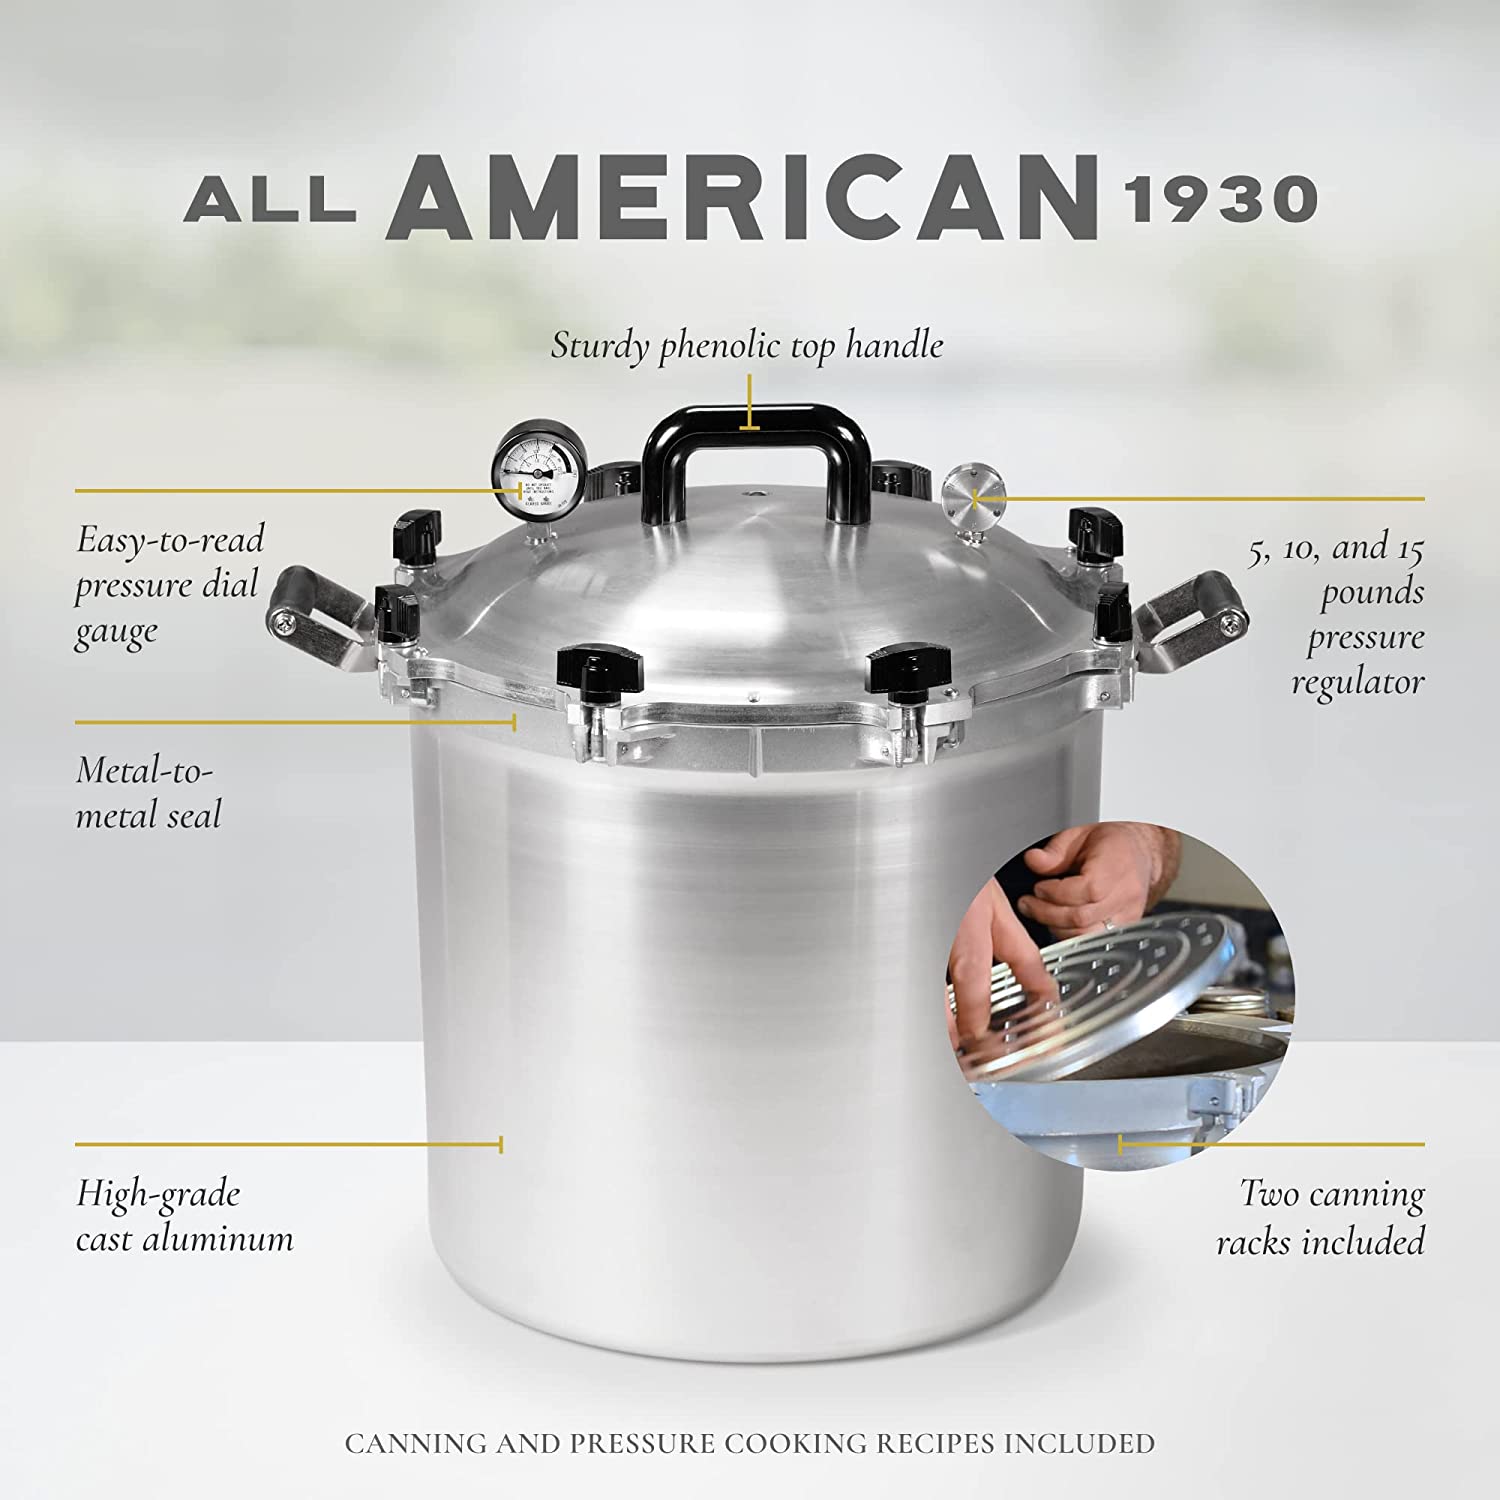  All American 1930 - Pressure Regulator Weight - Part